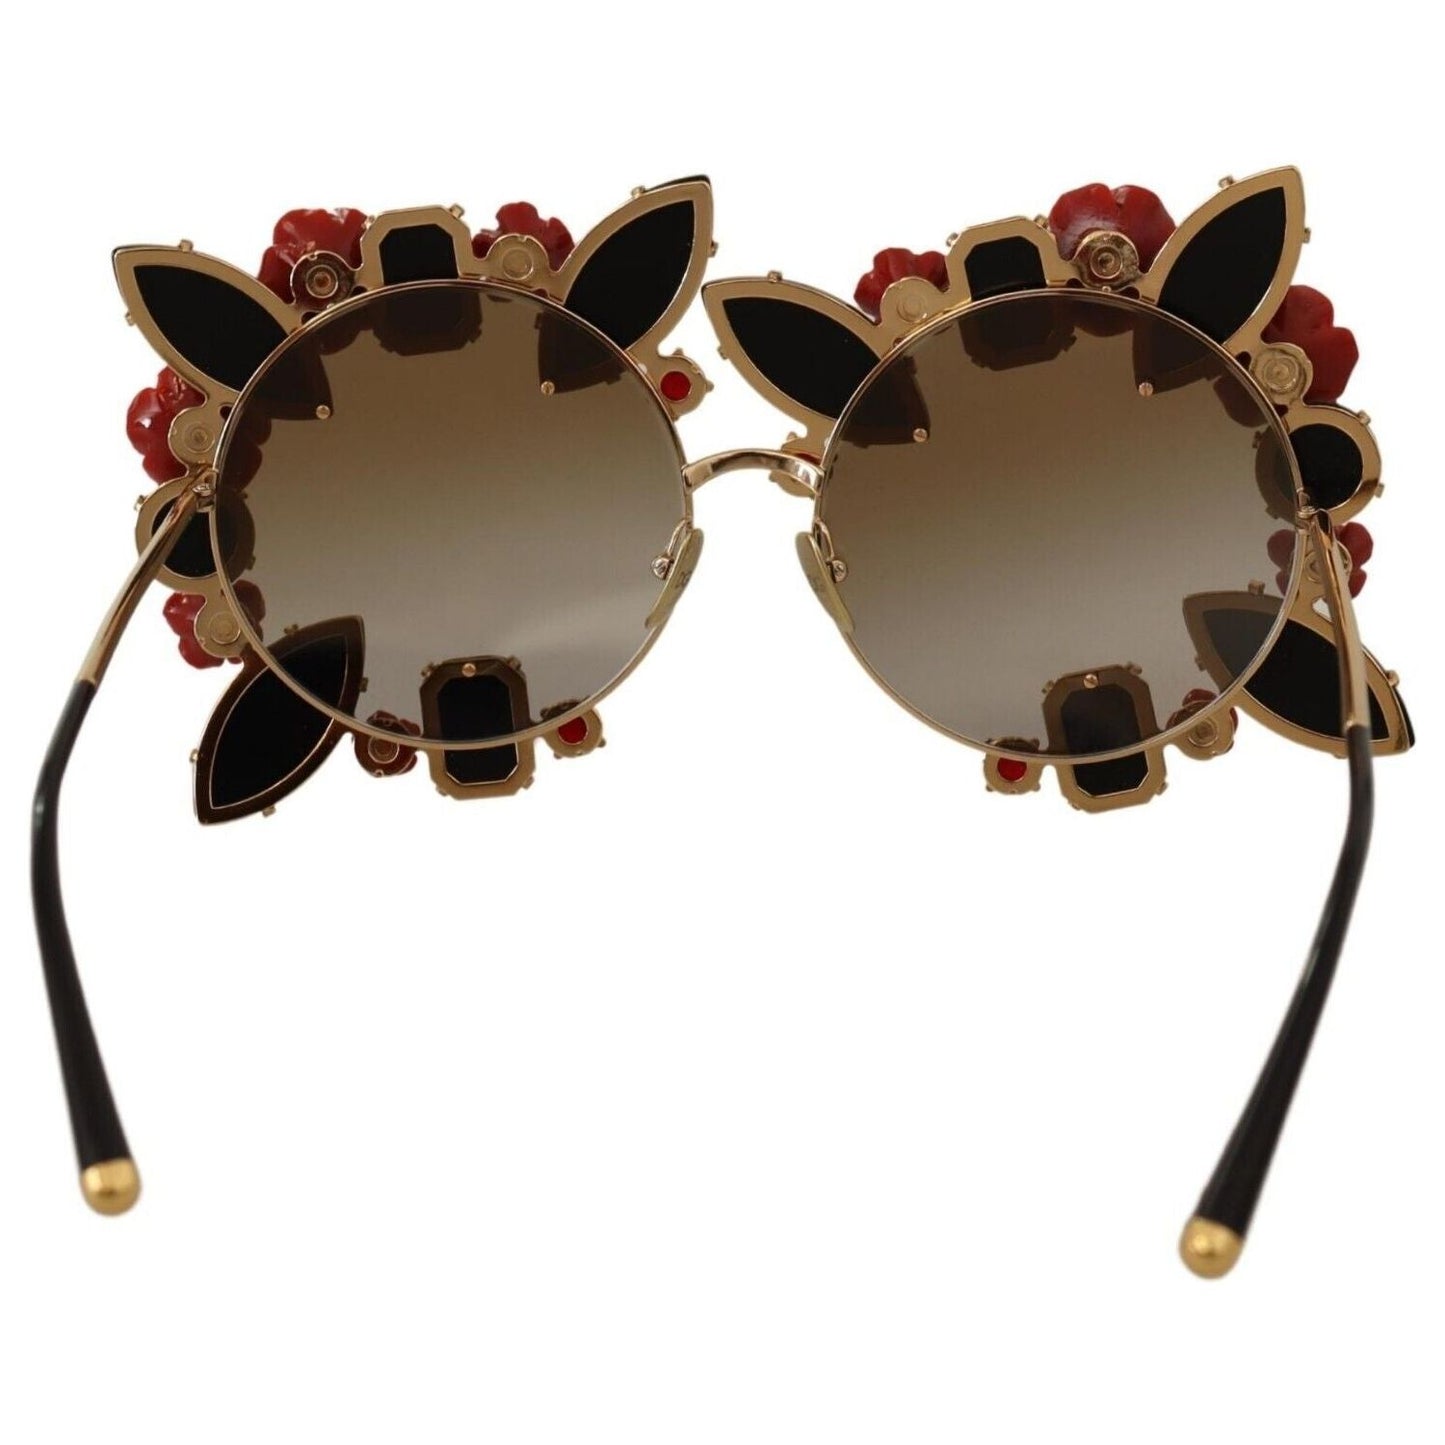 Dolce & Gabbana Elegant Round Metal Sunglasses with Rose Detail WOMAN SUNGLASSES gold-metal-frame-roses-embellished-sunglasses